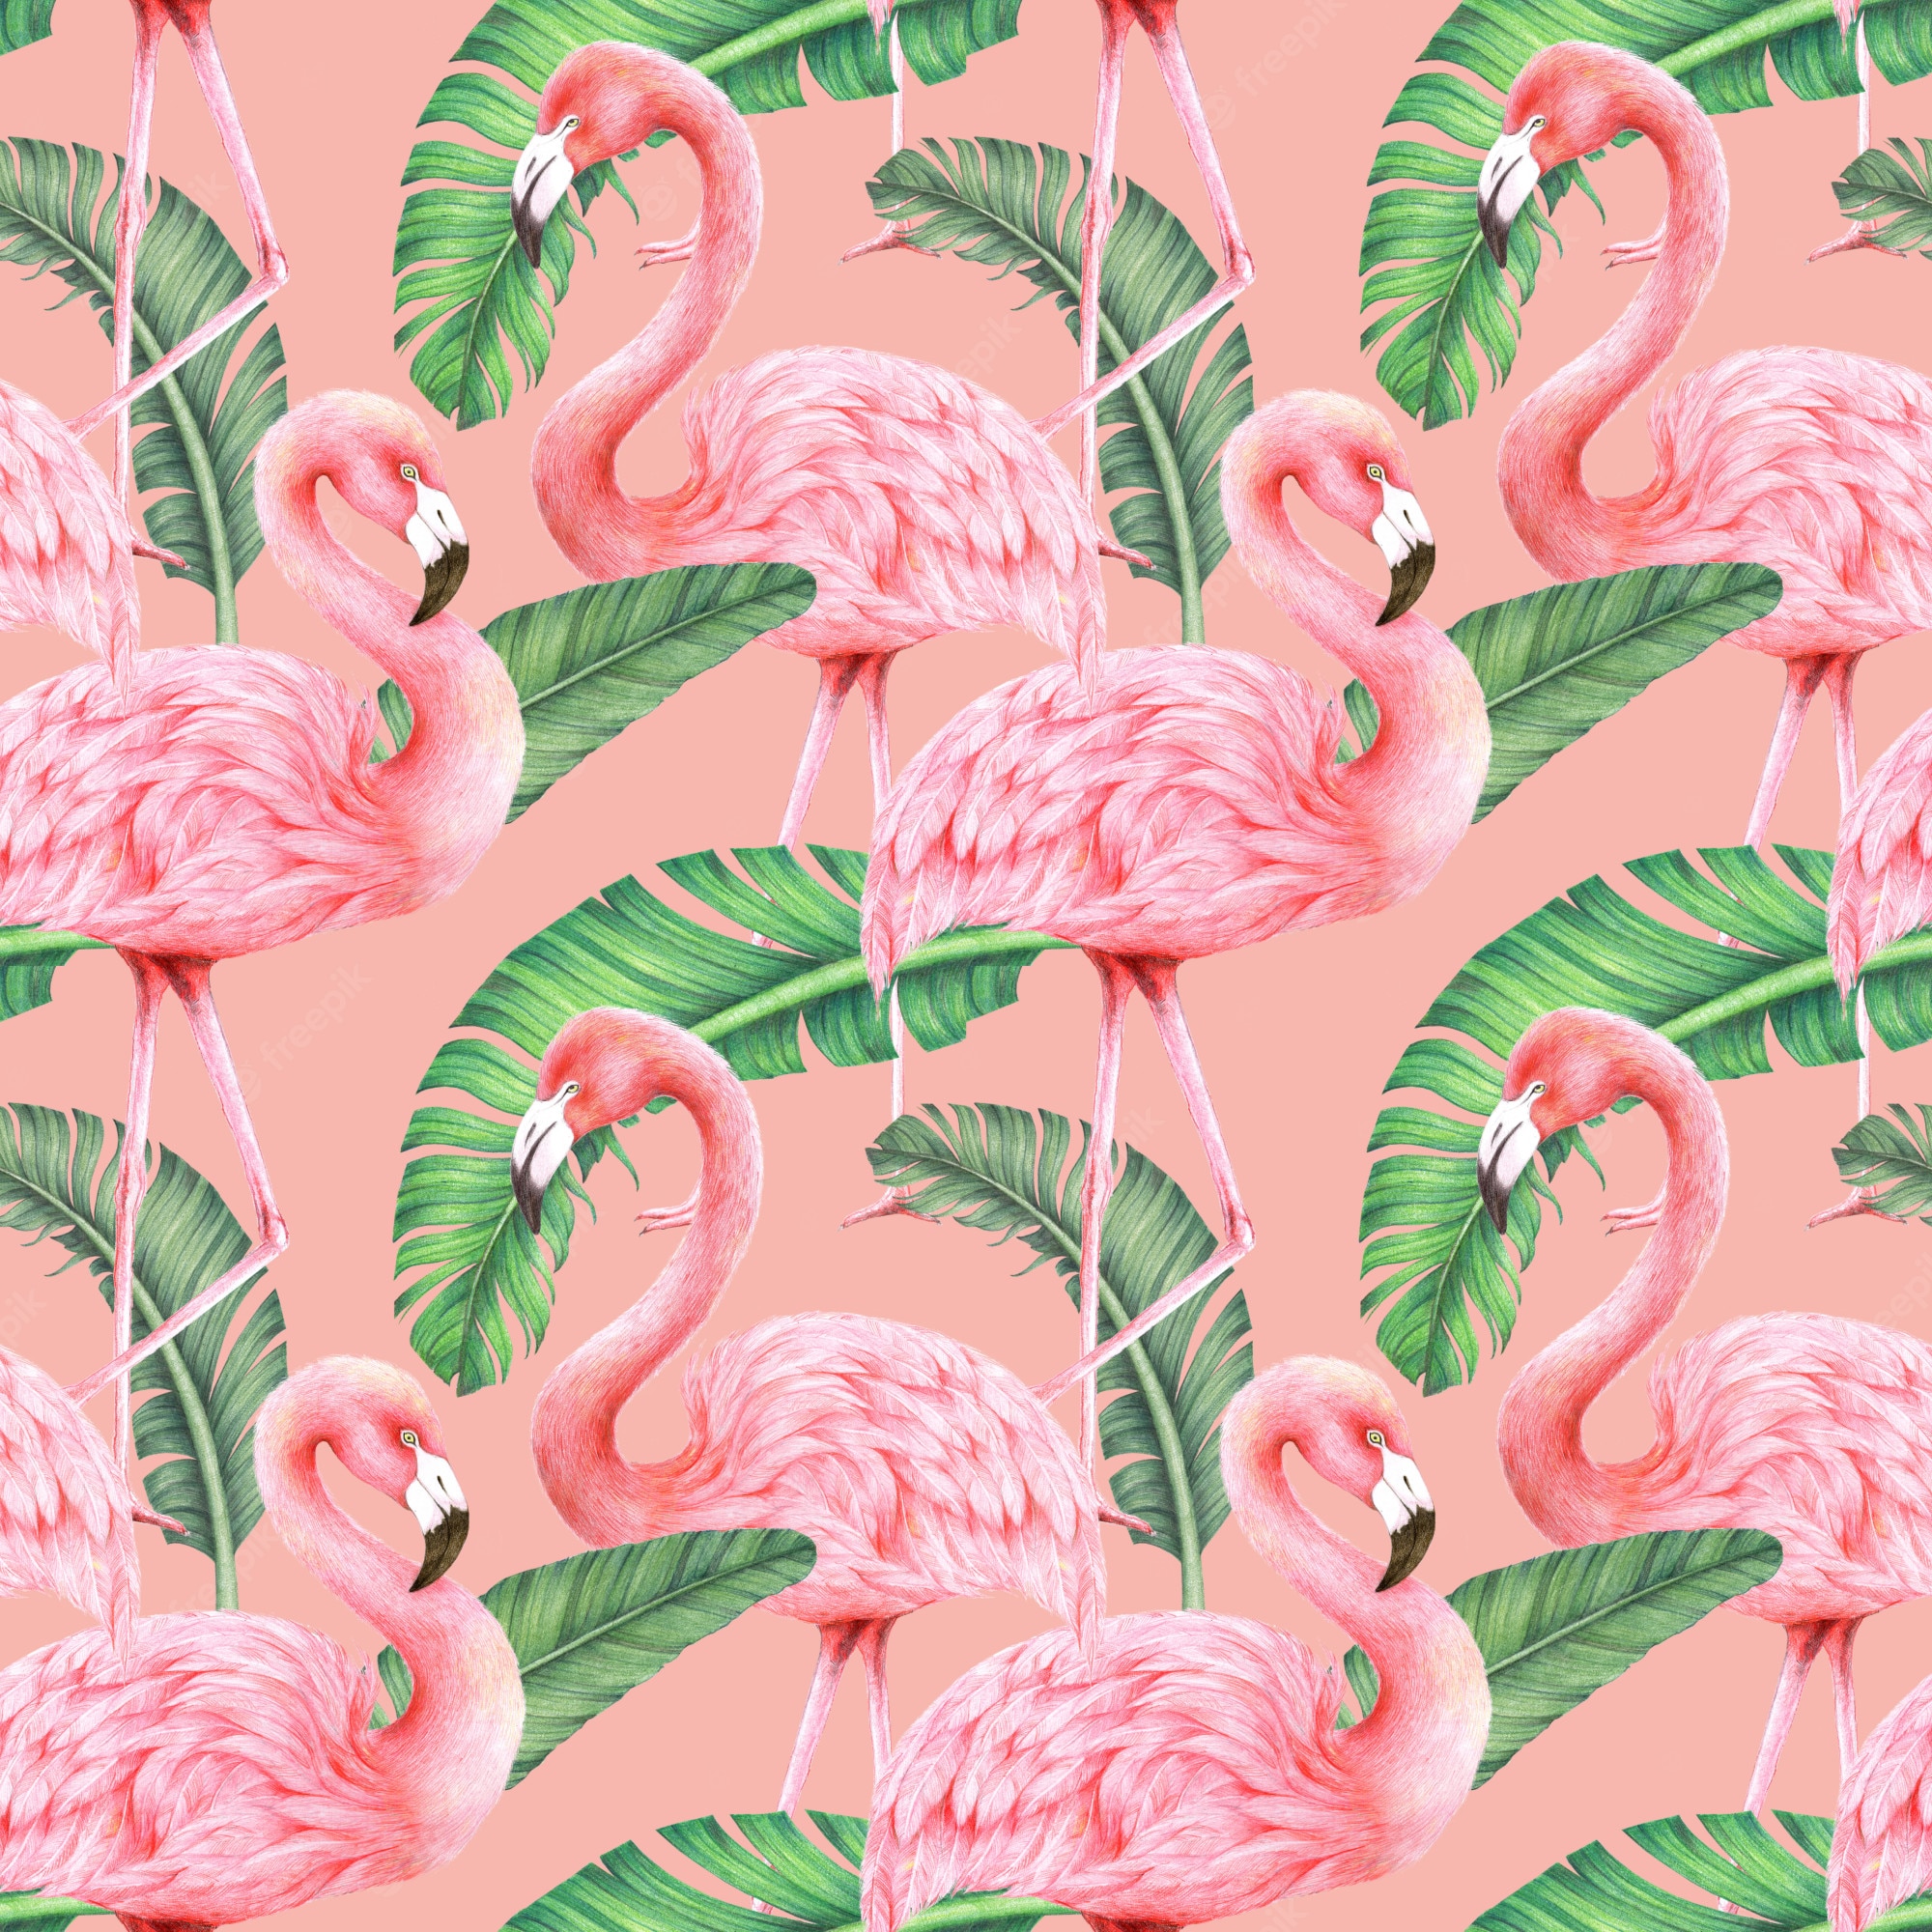 Pink Flamingo Image. Free Vectors, & PSD